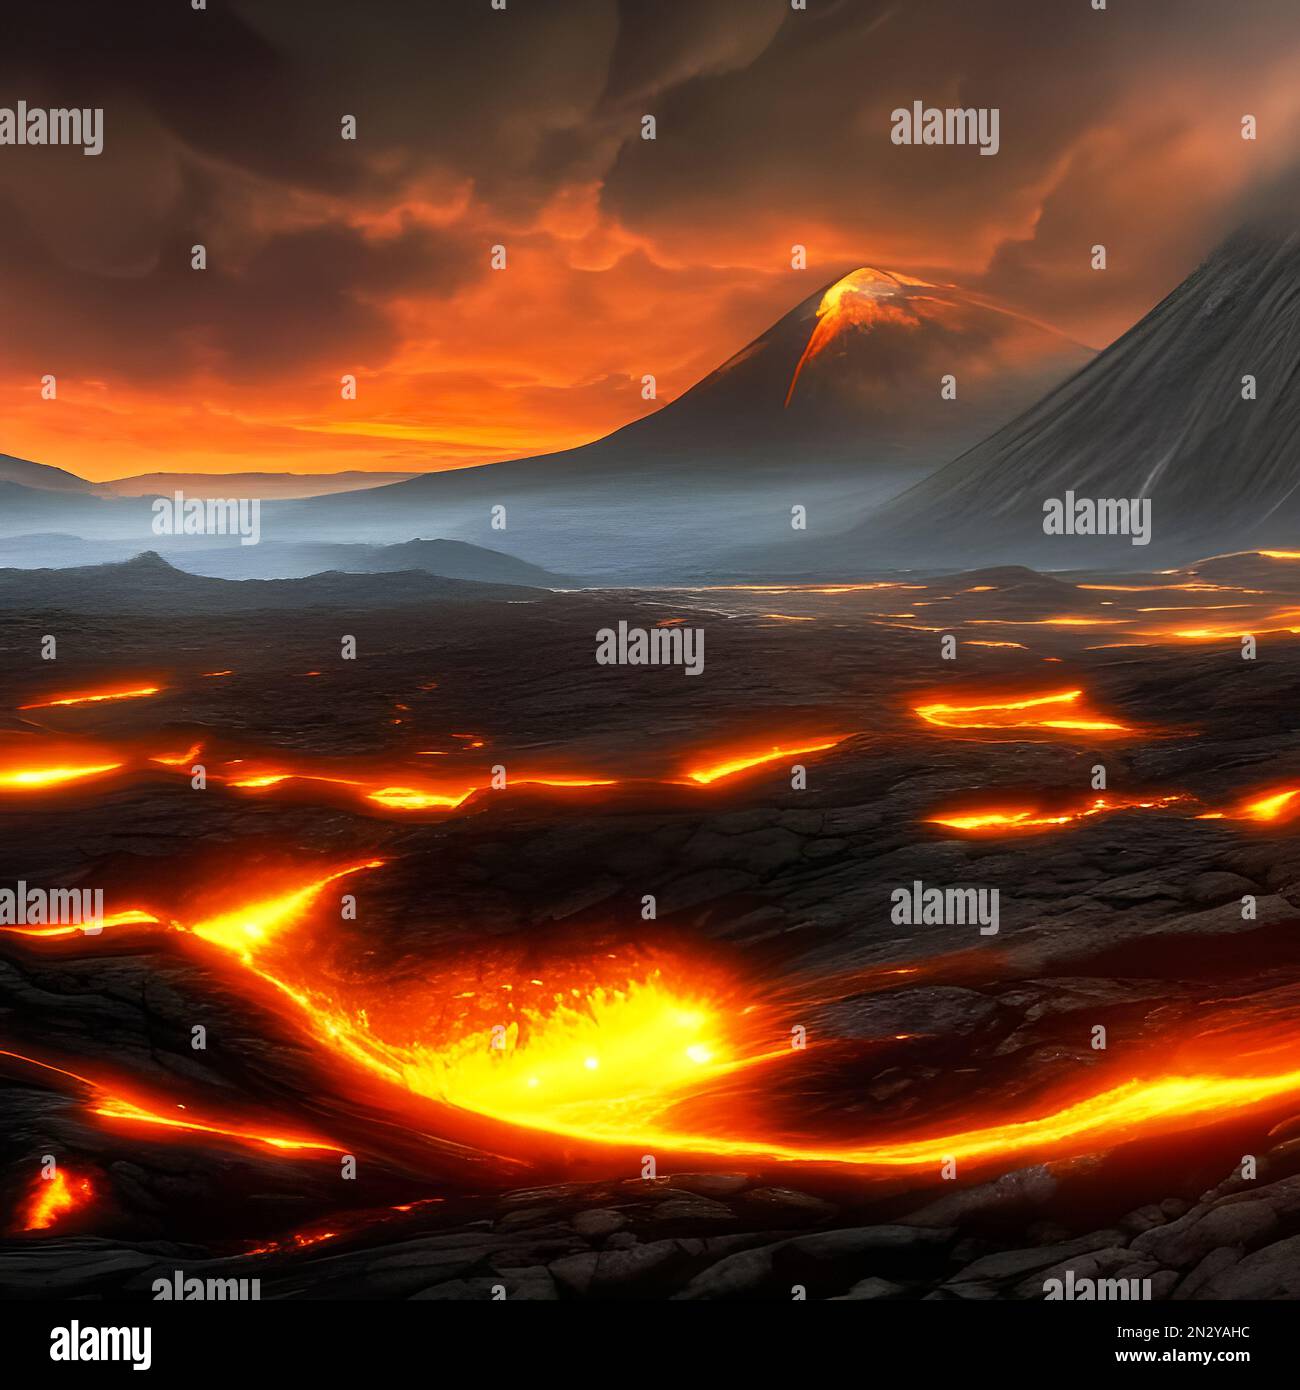 Volcano and lava flow fantasy landscape. Stock Photo